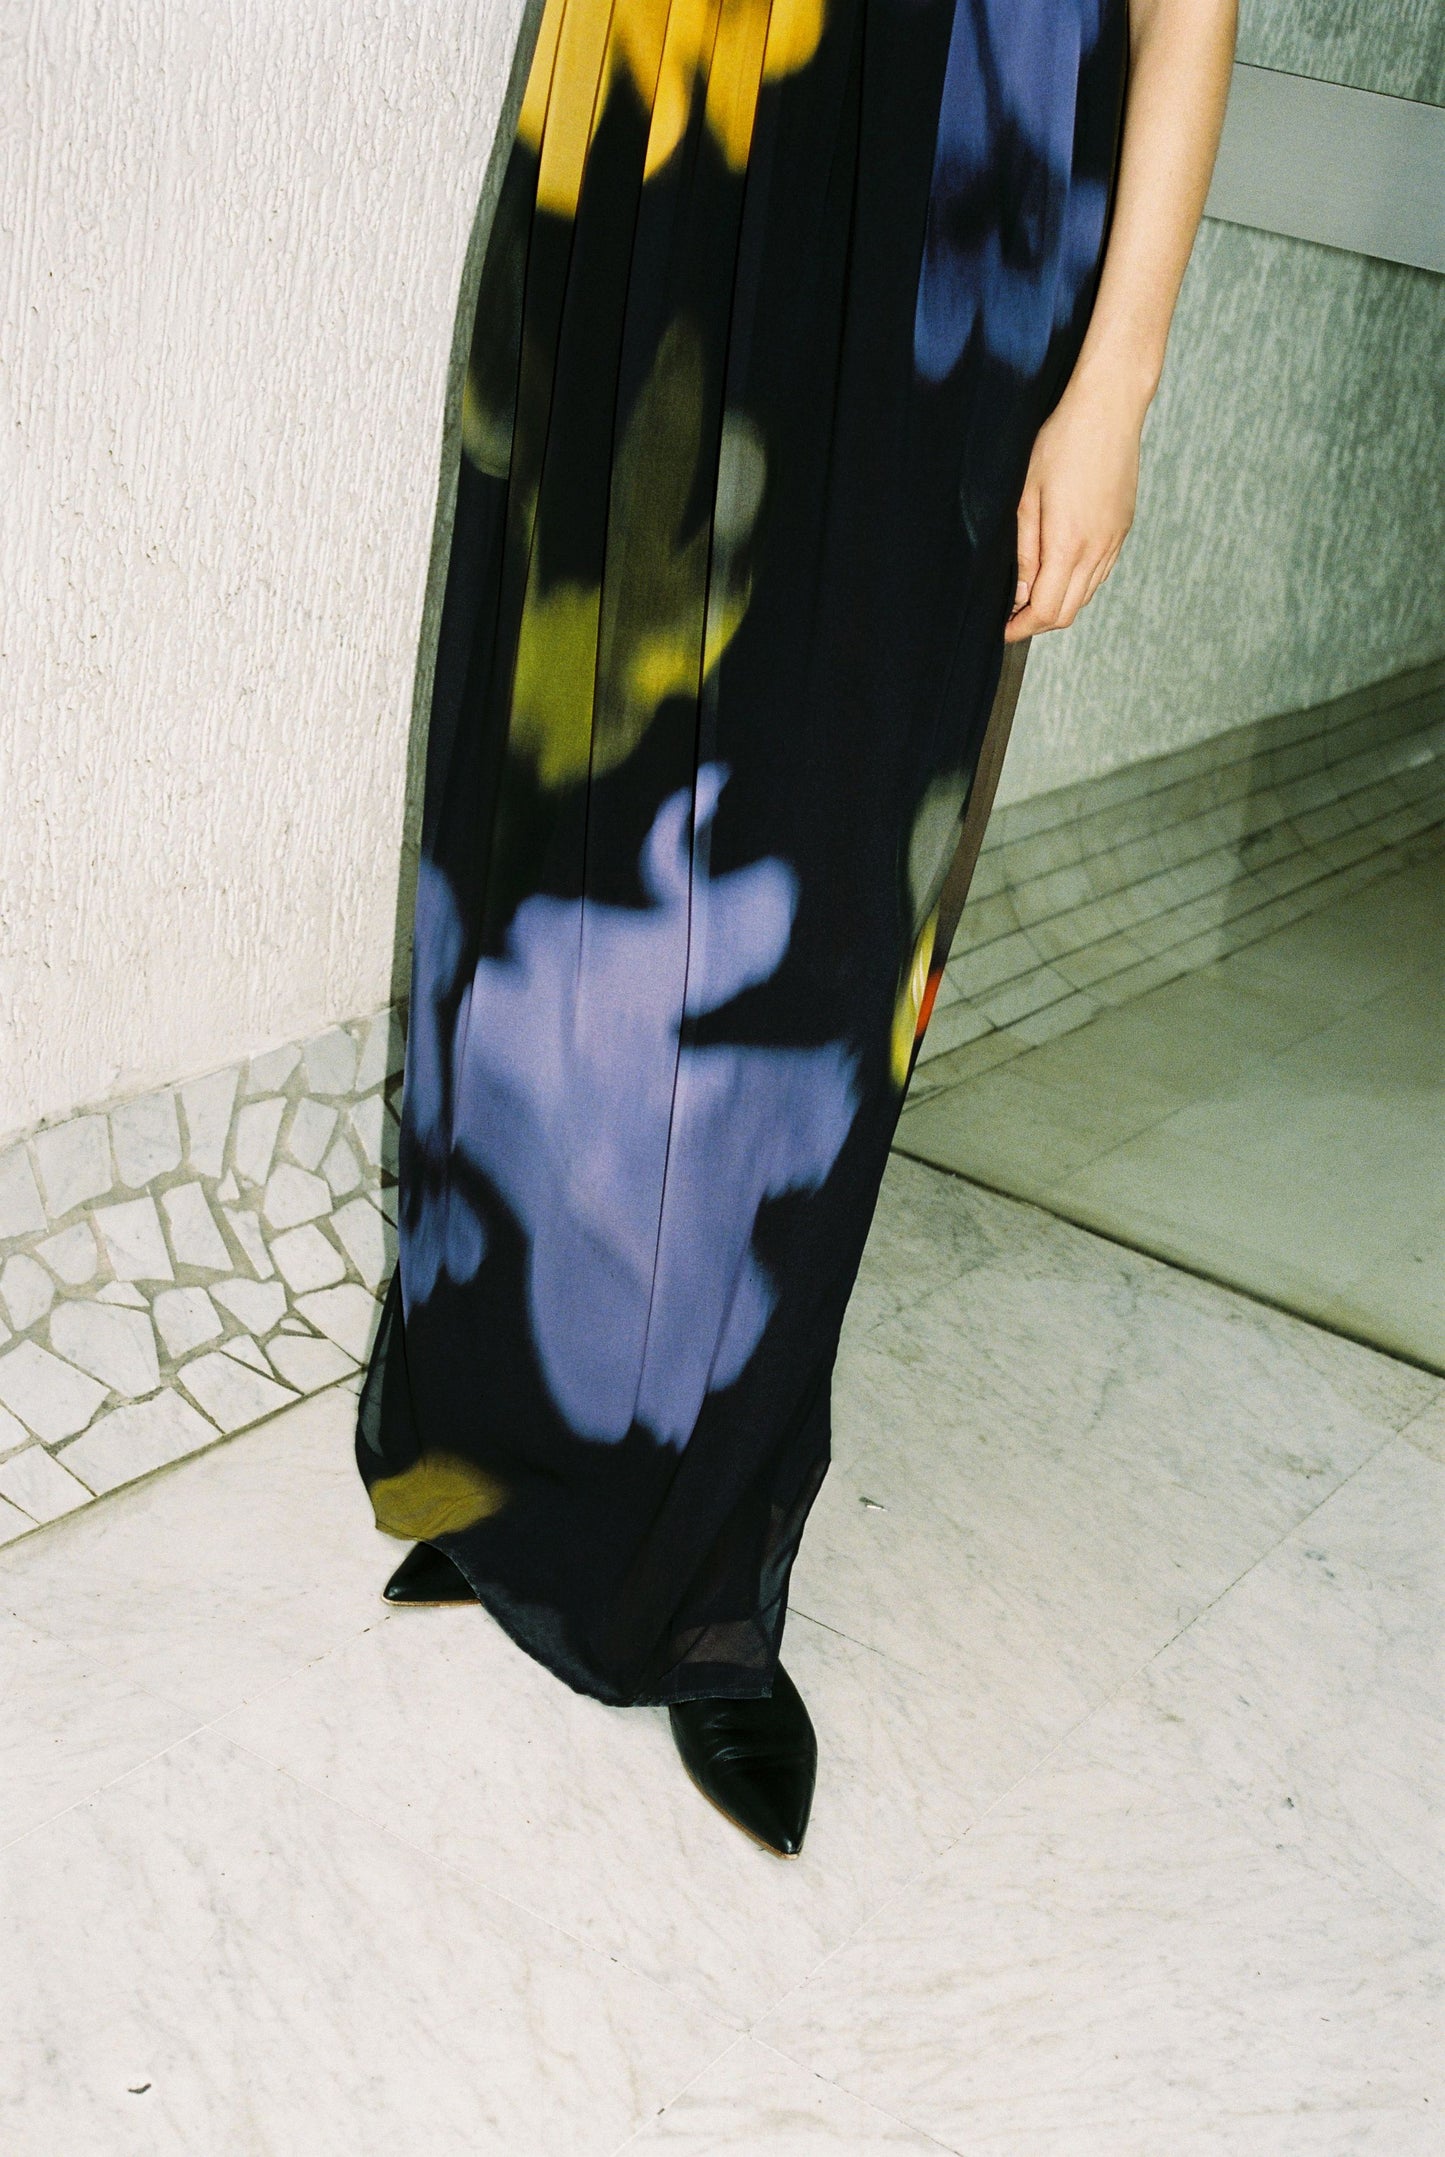 VALERIO MAXI DRESS - PURPLE AND BLACK